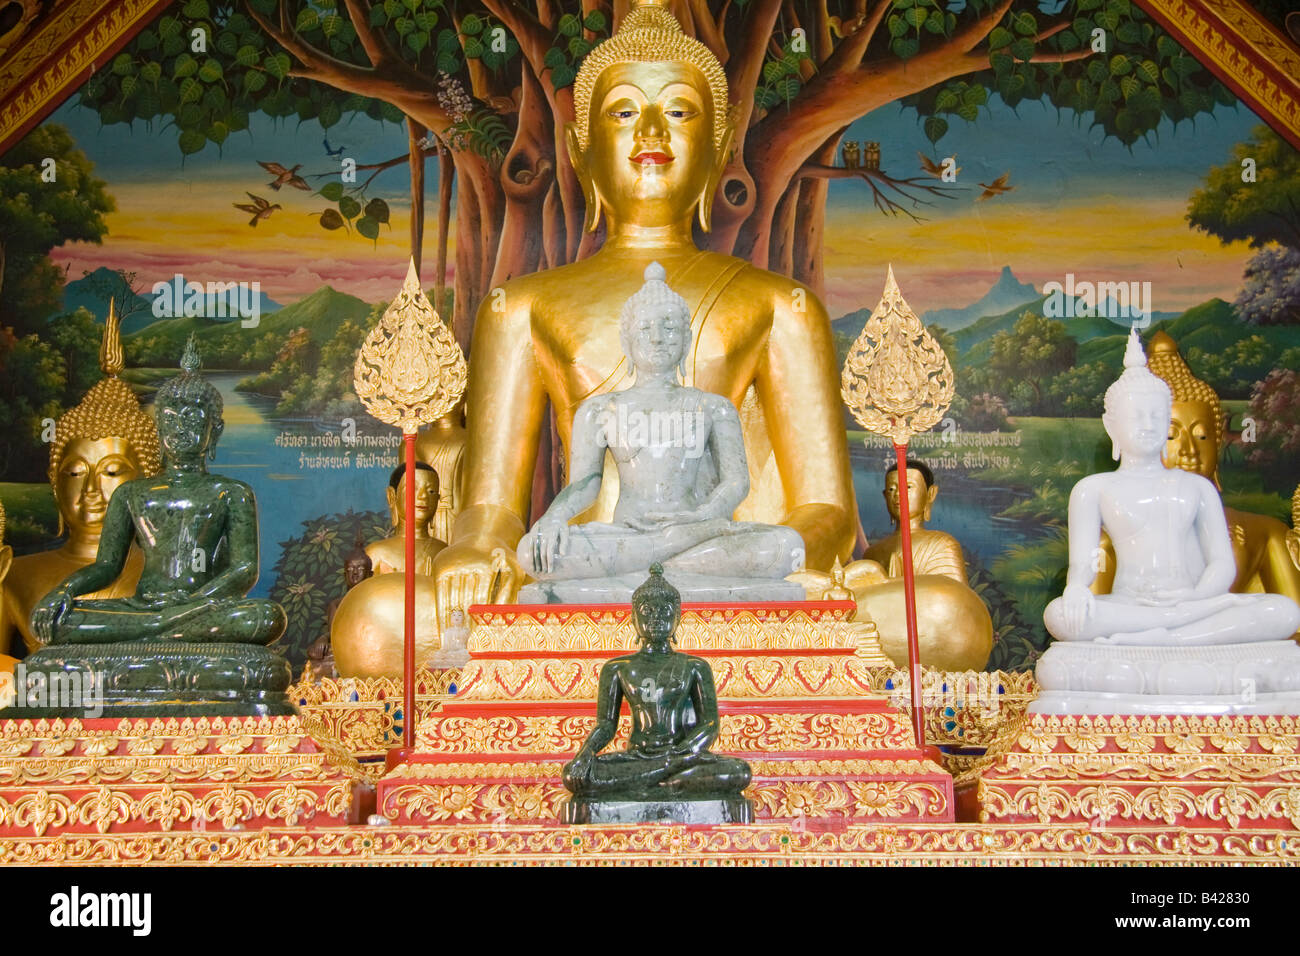 Sculptures de jade du Bouddha de wat si kham, Chiang Mai, Thaïlande Banque D'Images